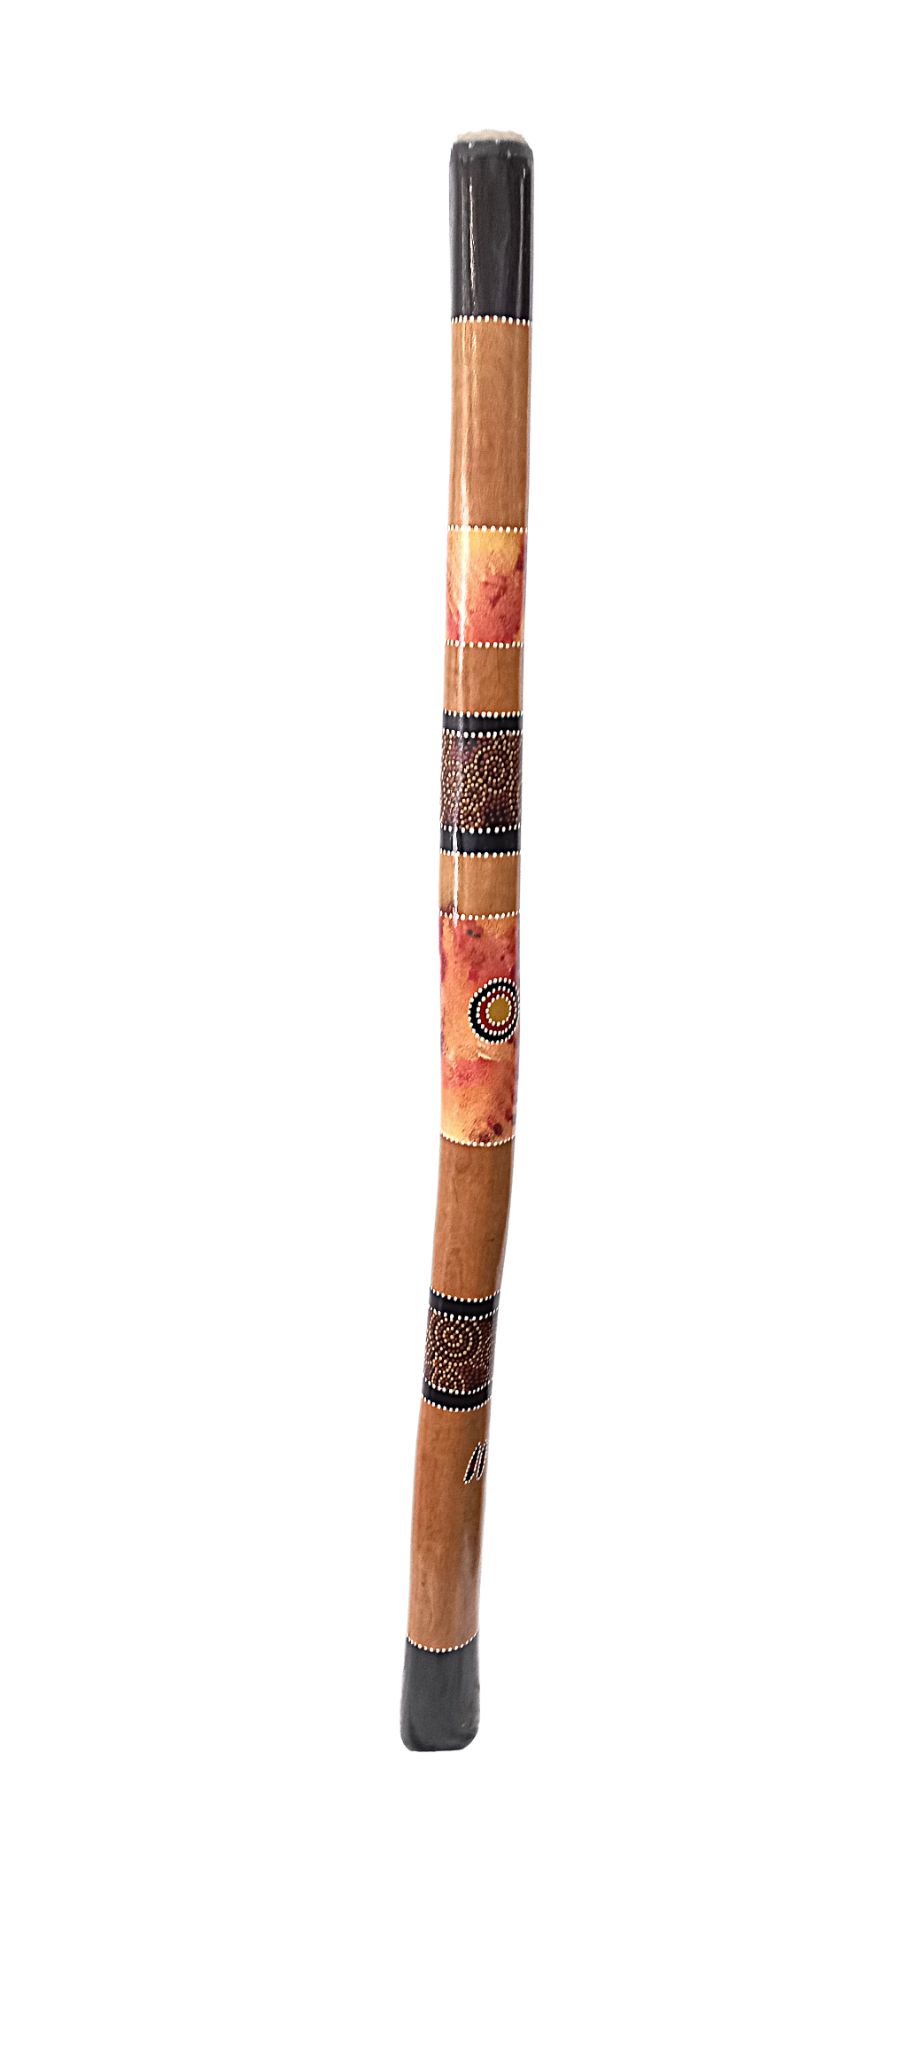 Didgeridoo - Kate Bush Encyclopedia